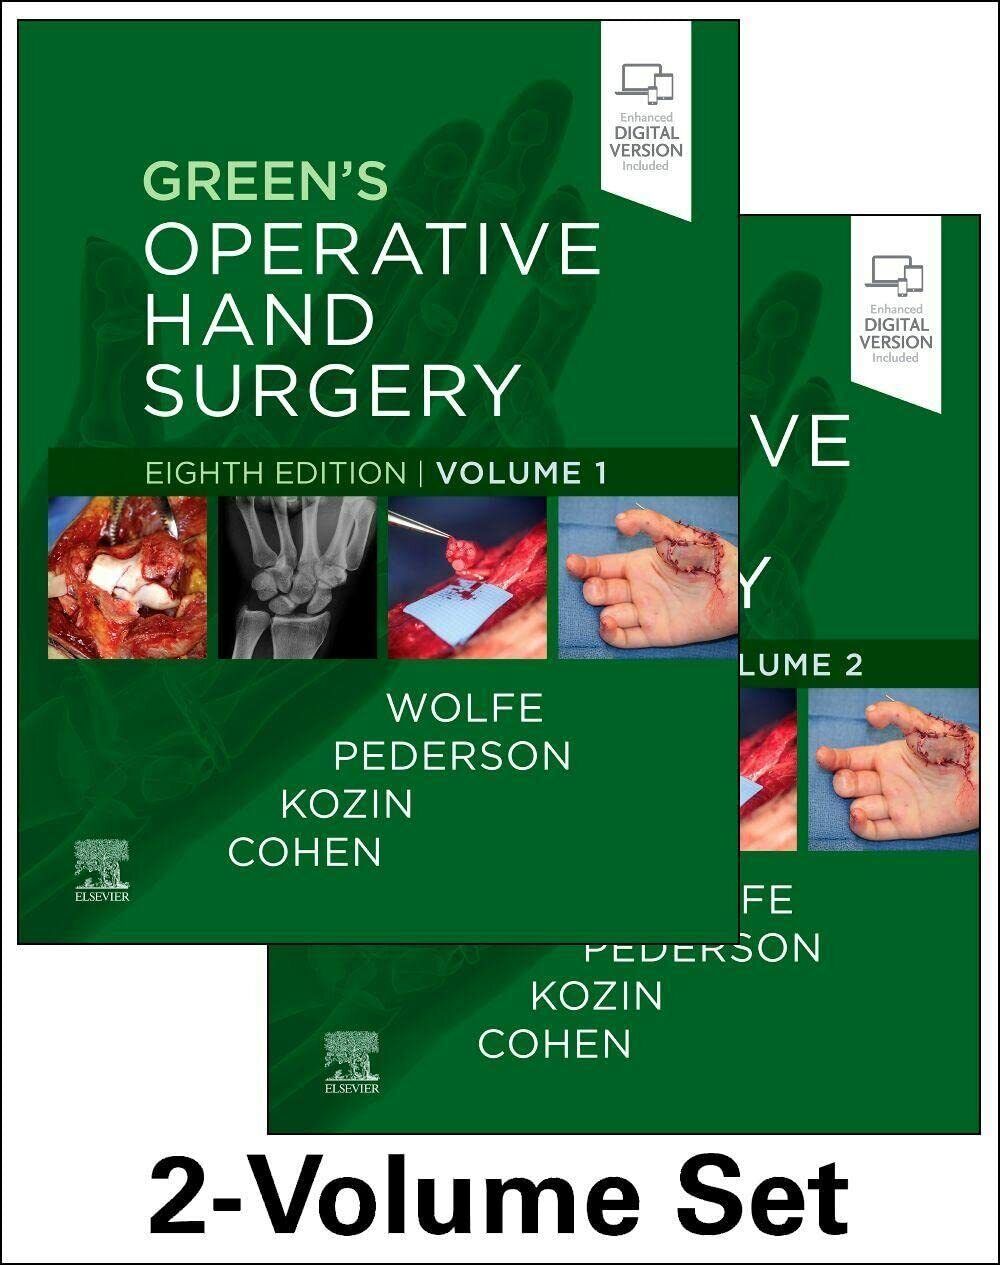 Green's Operative Hand Surgery: 2-Volume Set - ELSEVIER - 2021